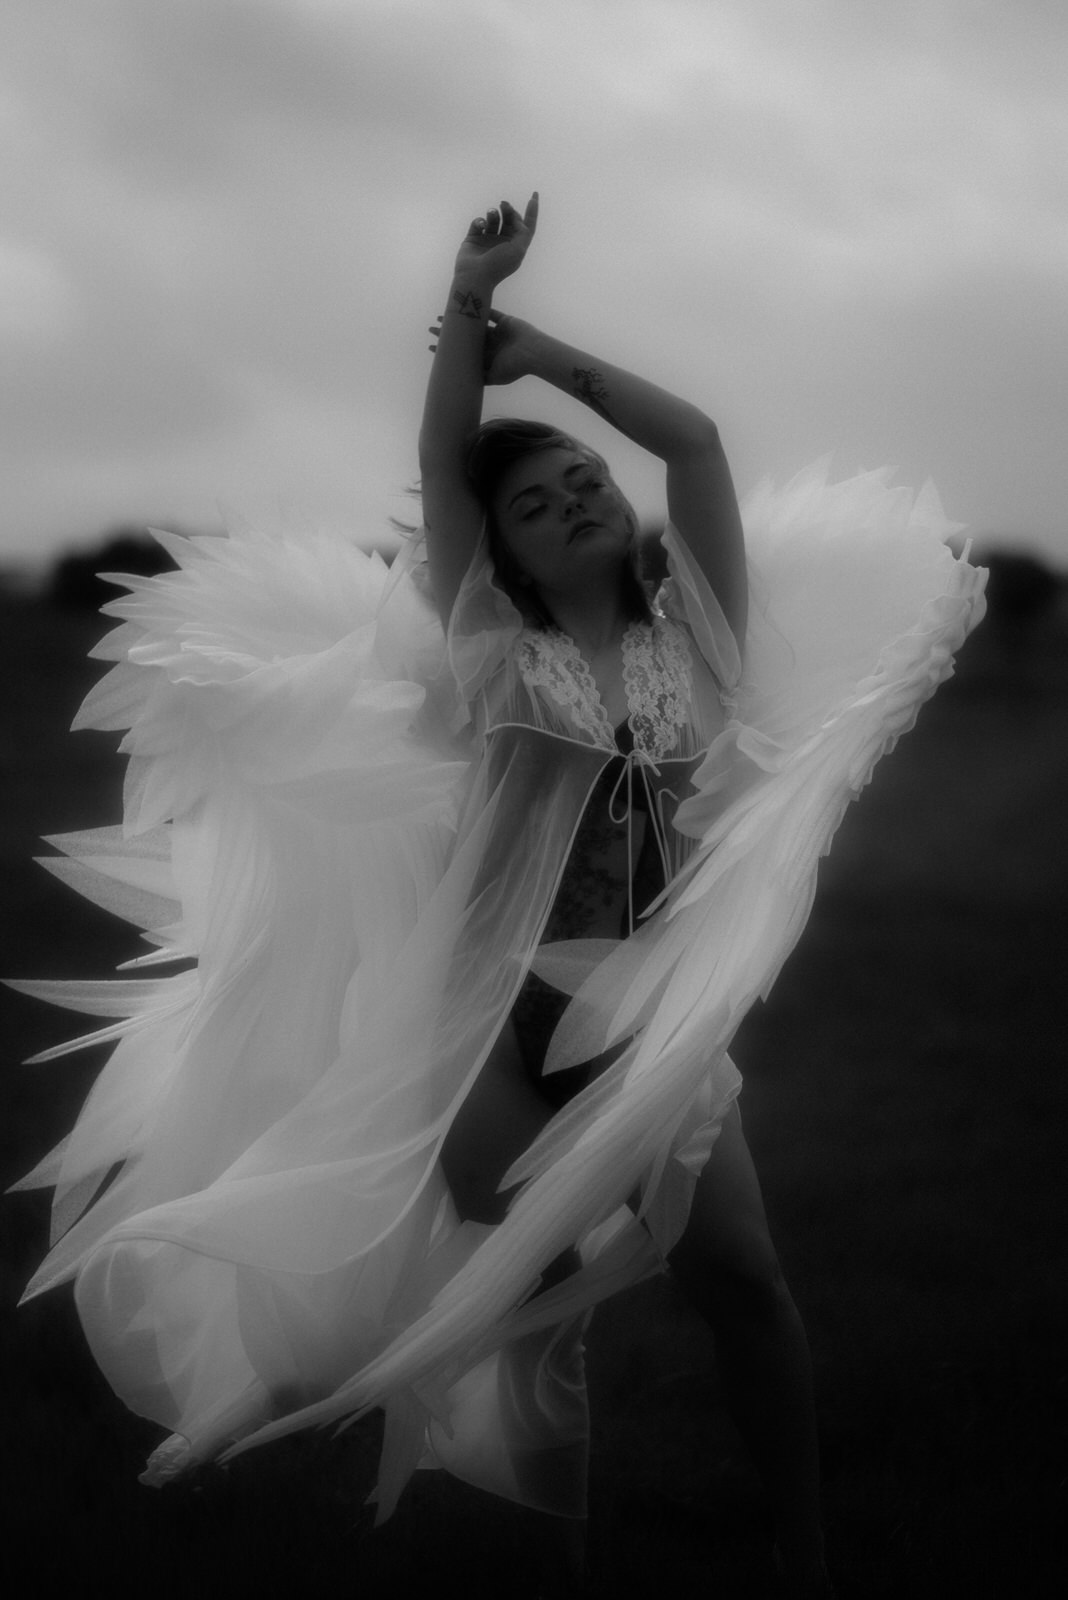 Angel wings photoshoot pose ideas